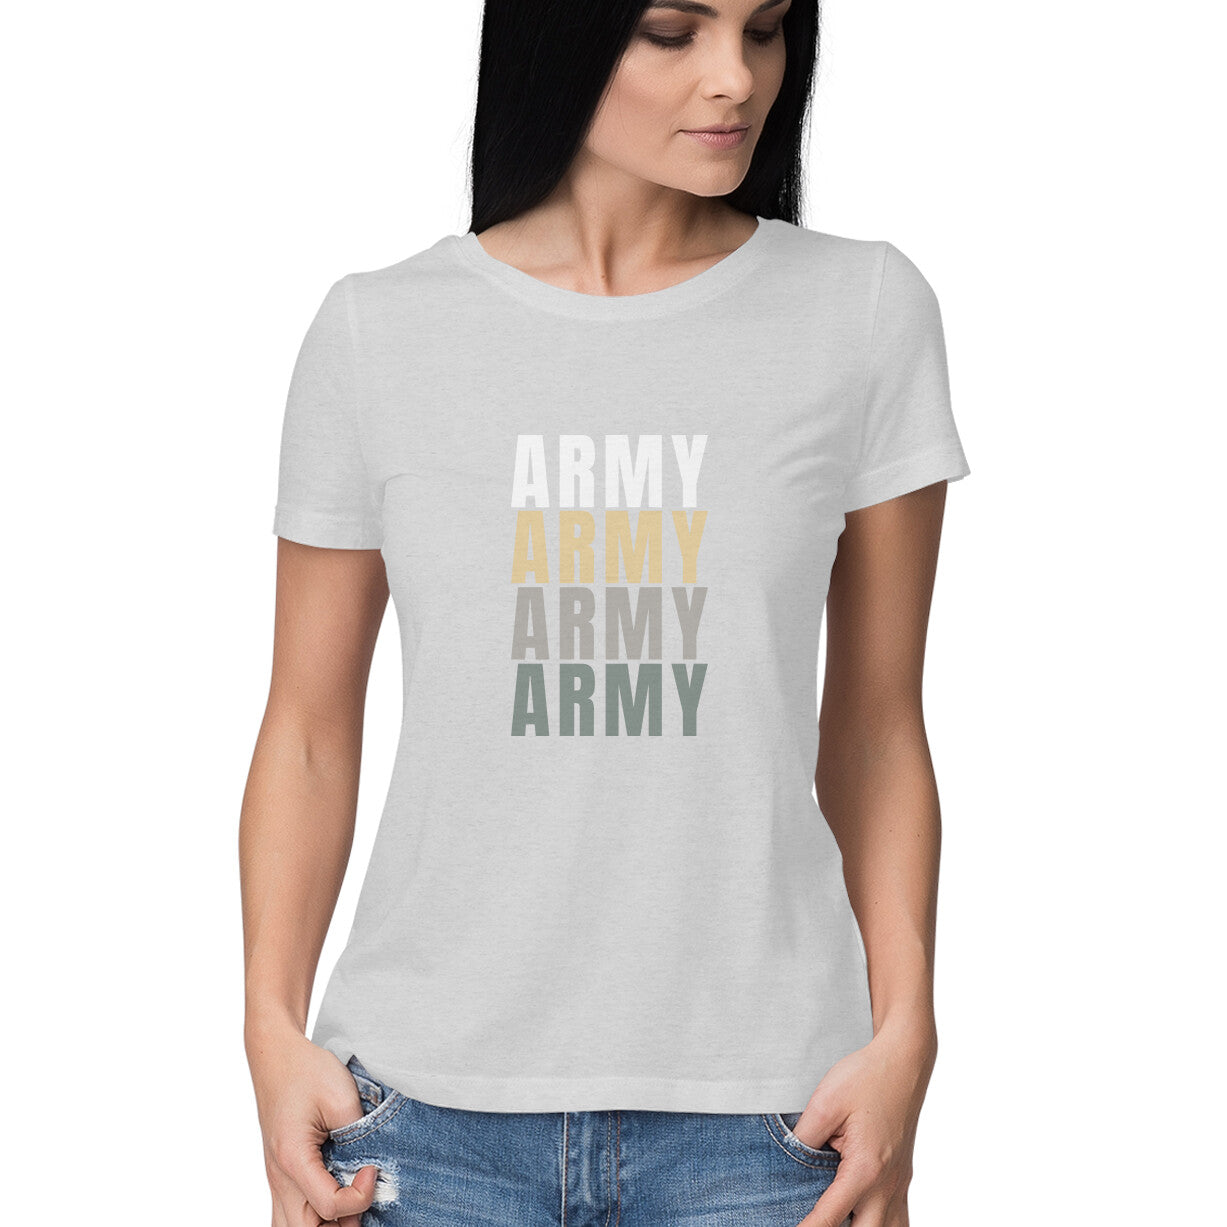 Army' women's tee